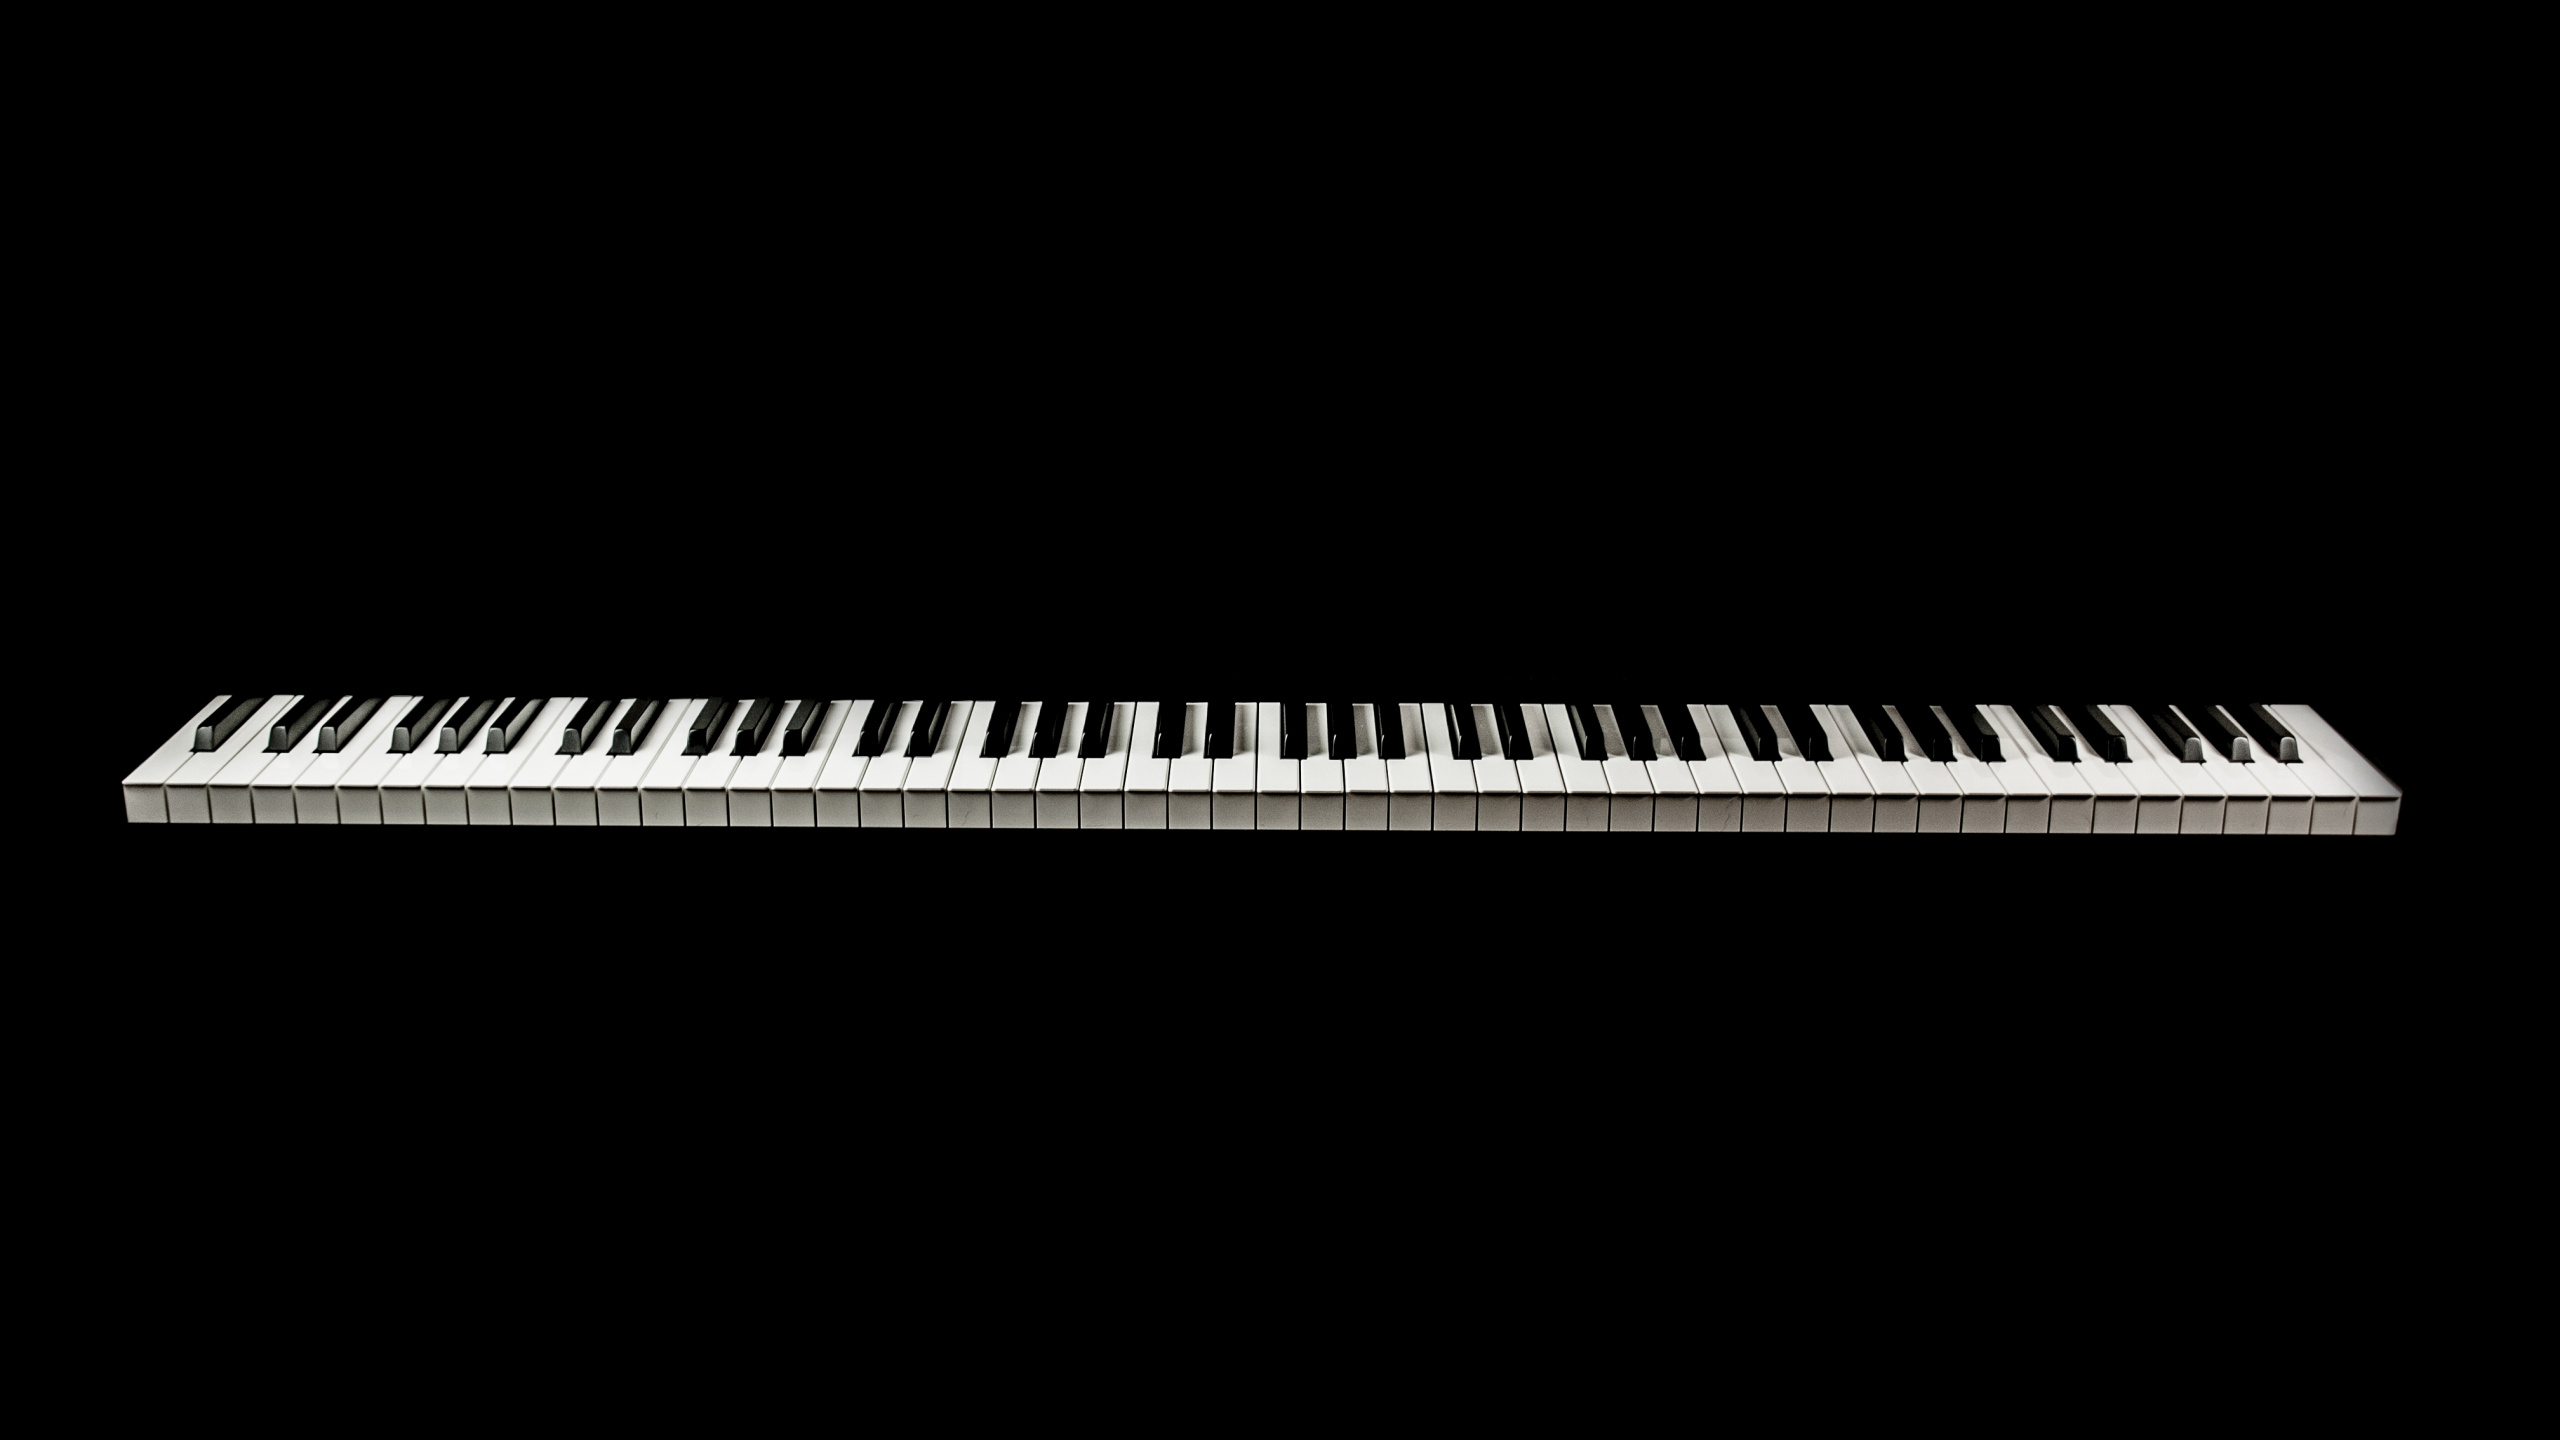 Musical Keyboard, Digital Piano, Electric Piano, Piano, Keyboard. Wallpaper in 2560x1440 Resolution